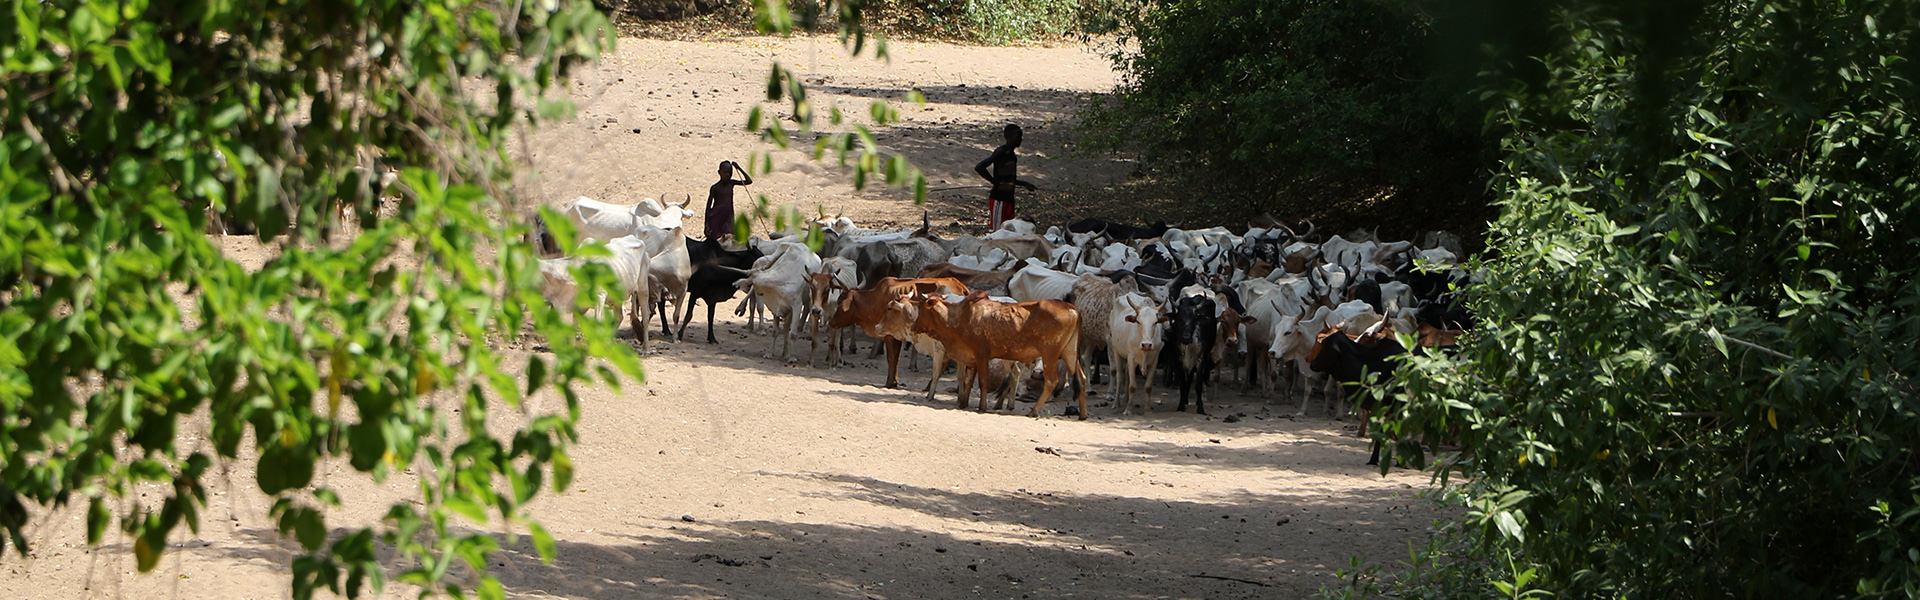 south-sudan-kuron-village-cattle